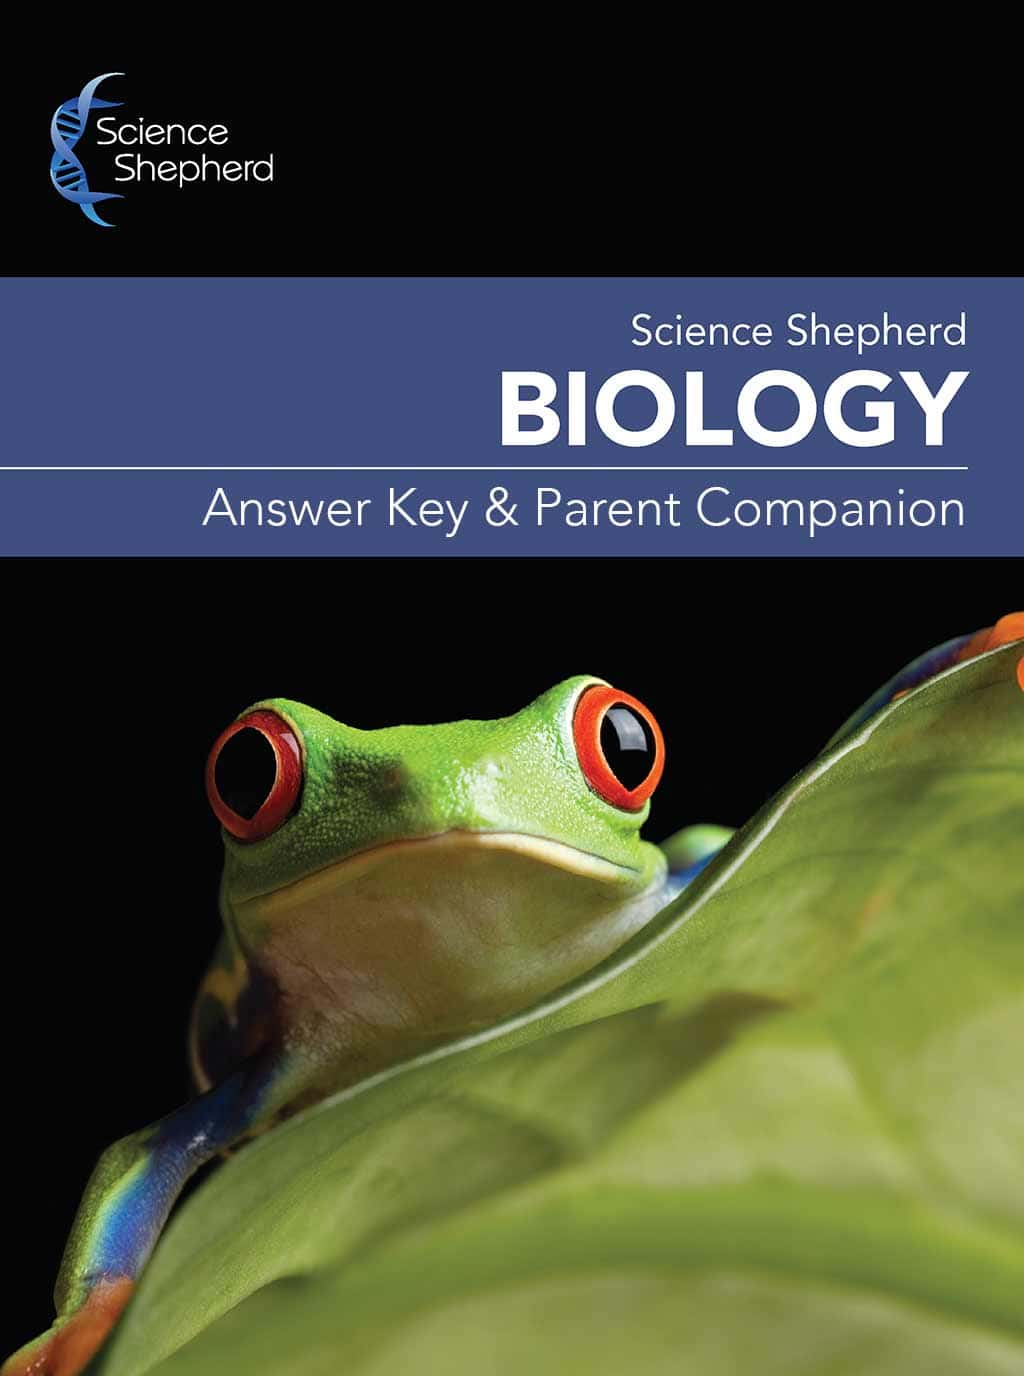 Science Shepherd high school Biology curriculum homeschool Answer Key & Parent Companion cover